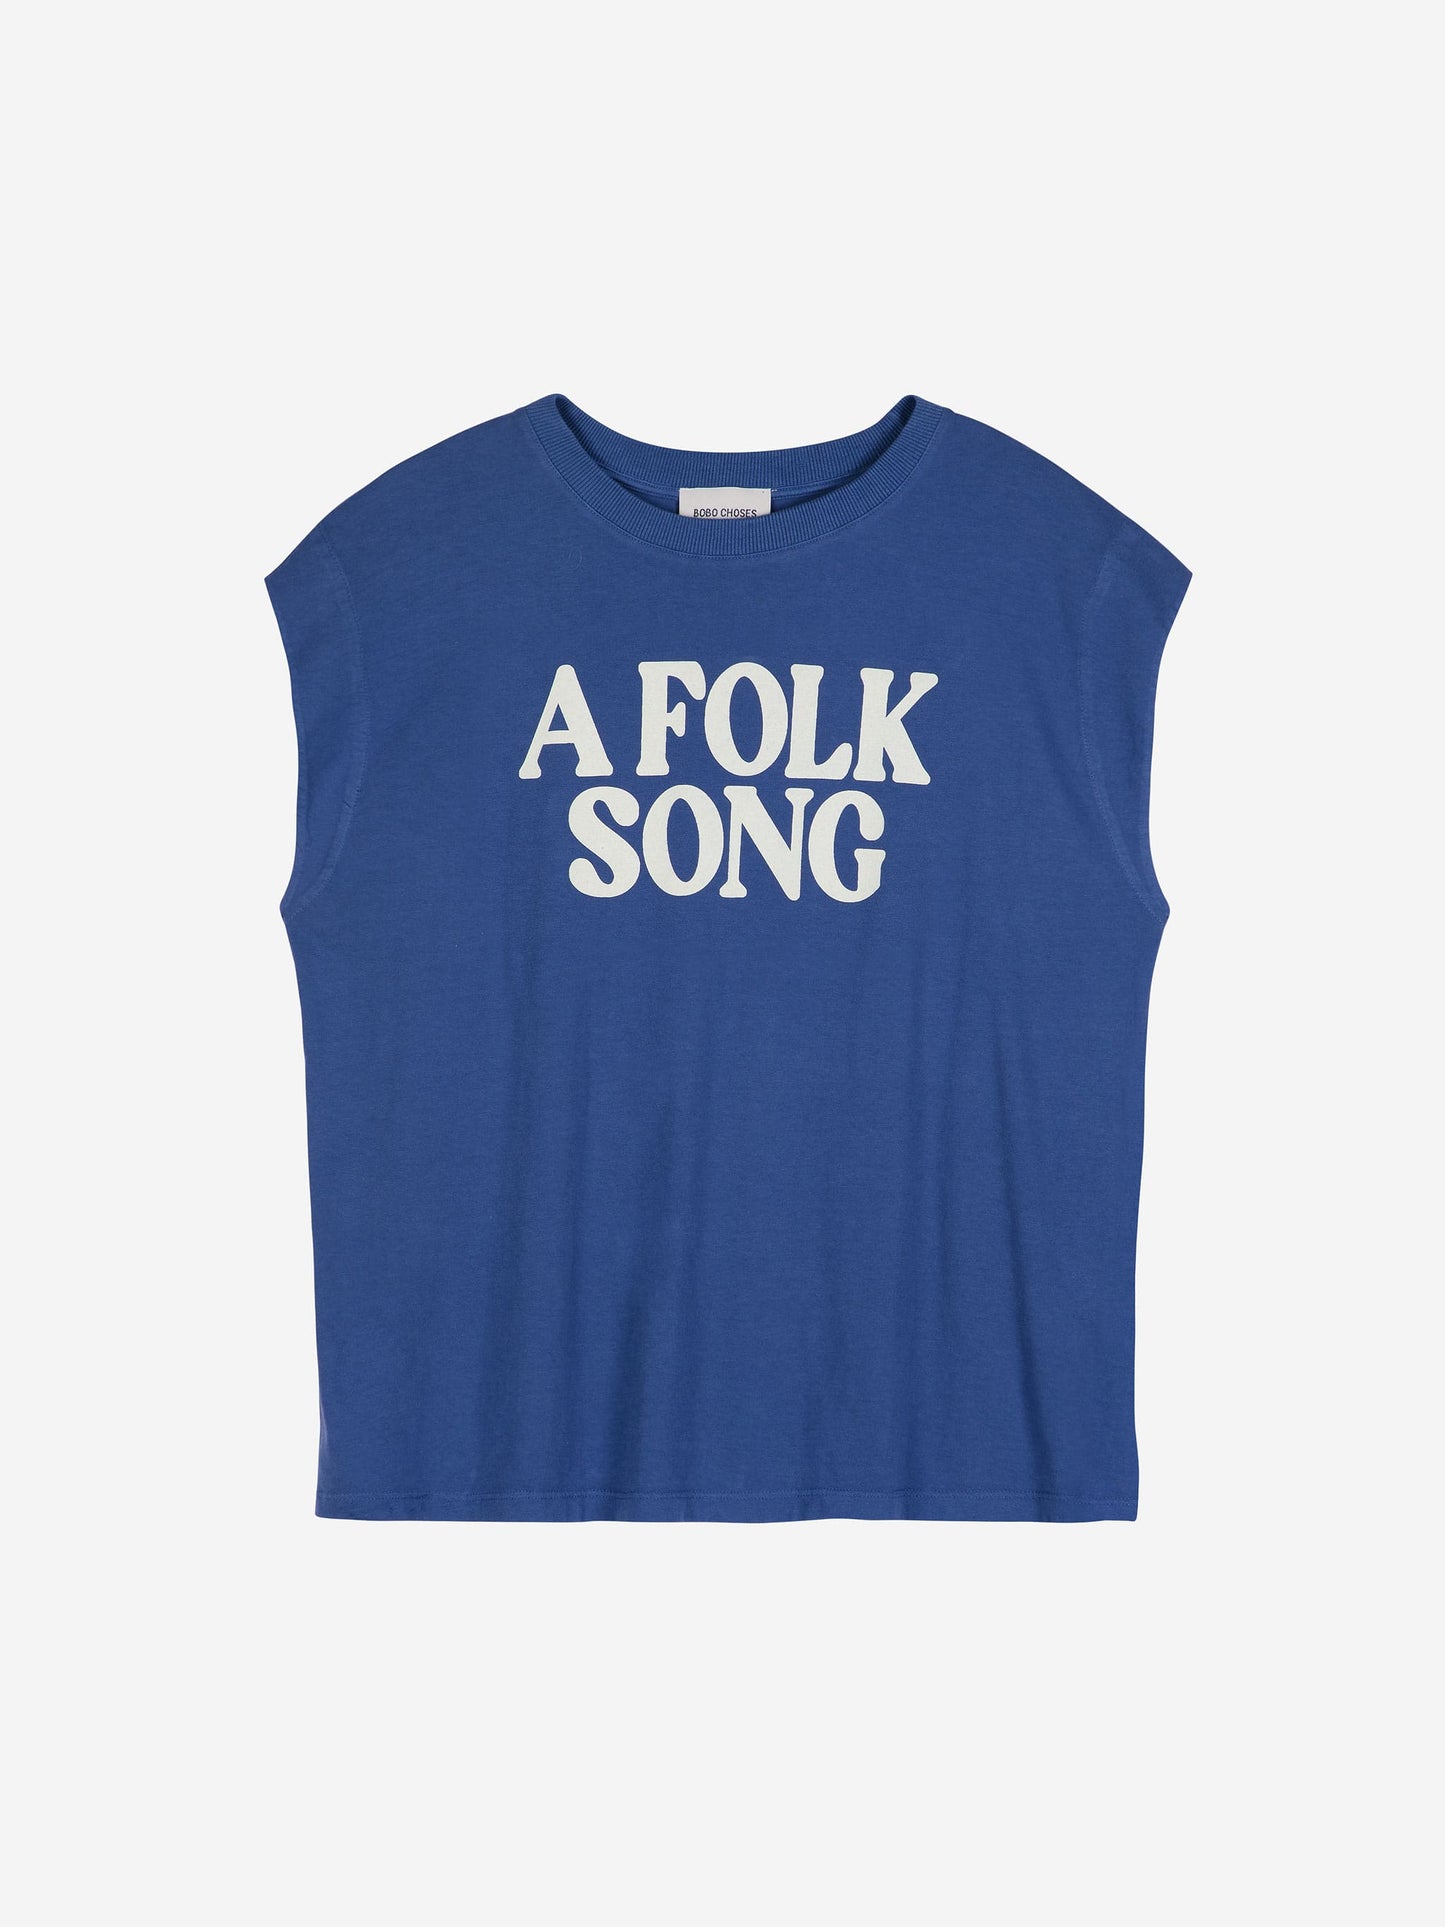 Camiseta A Folk Song